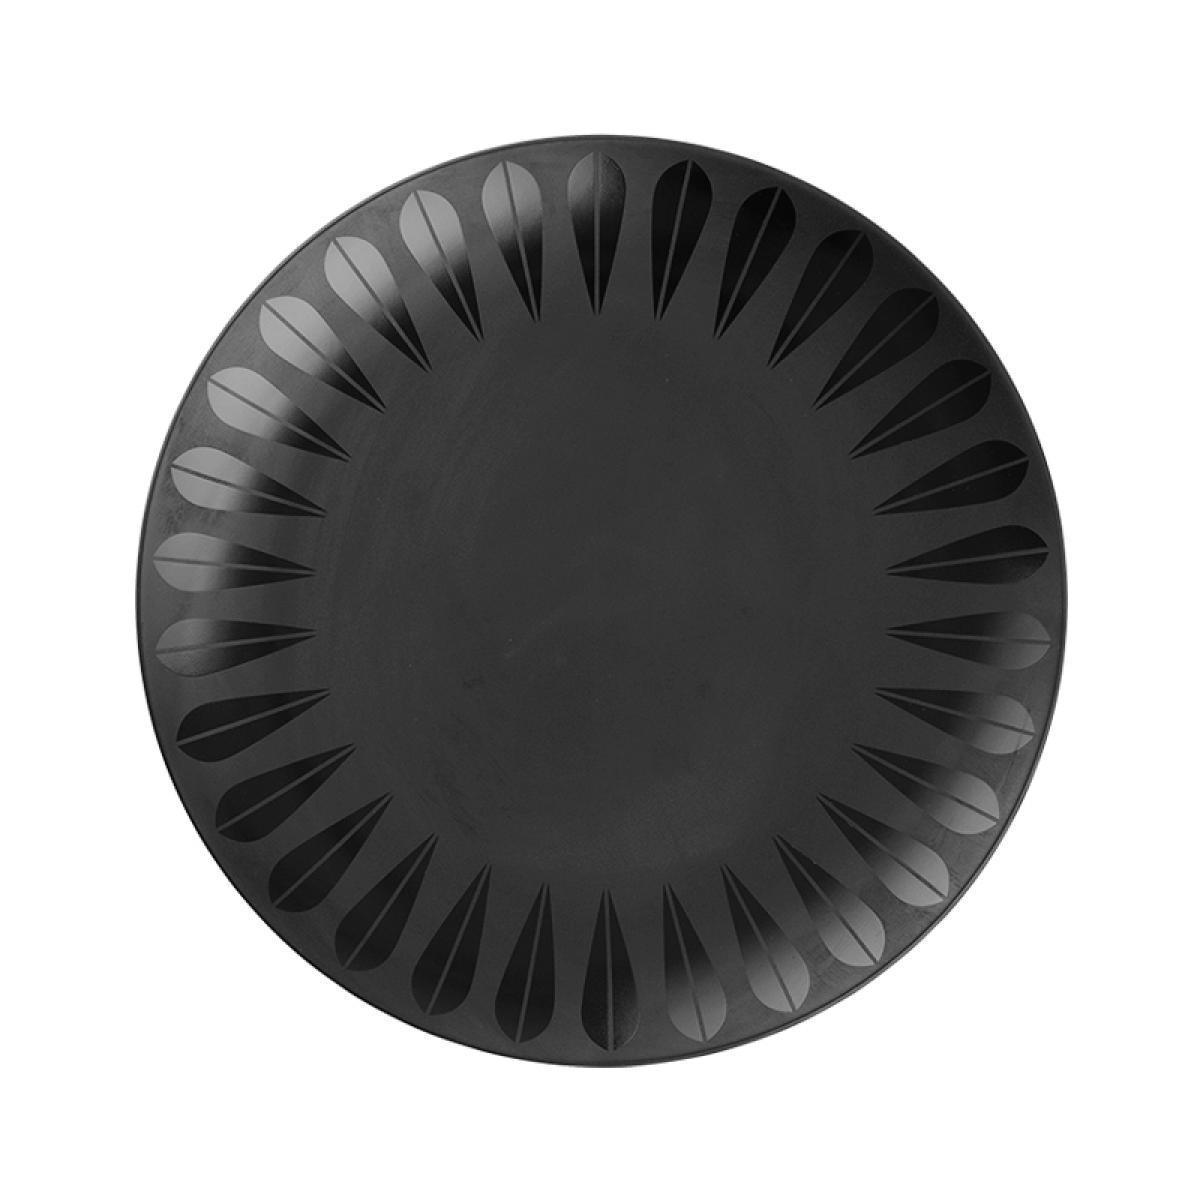 Lucie Kaas Arne Clausen Plate Deep Black, Ø 28cm